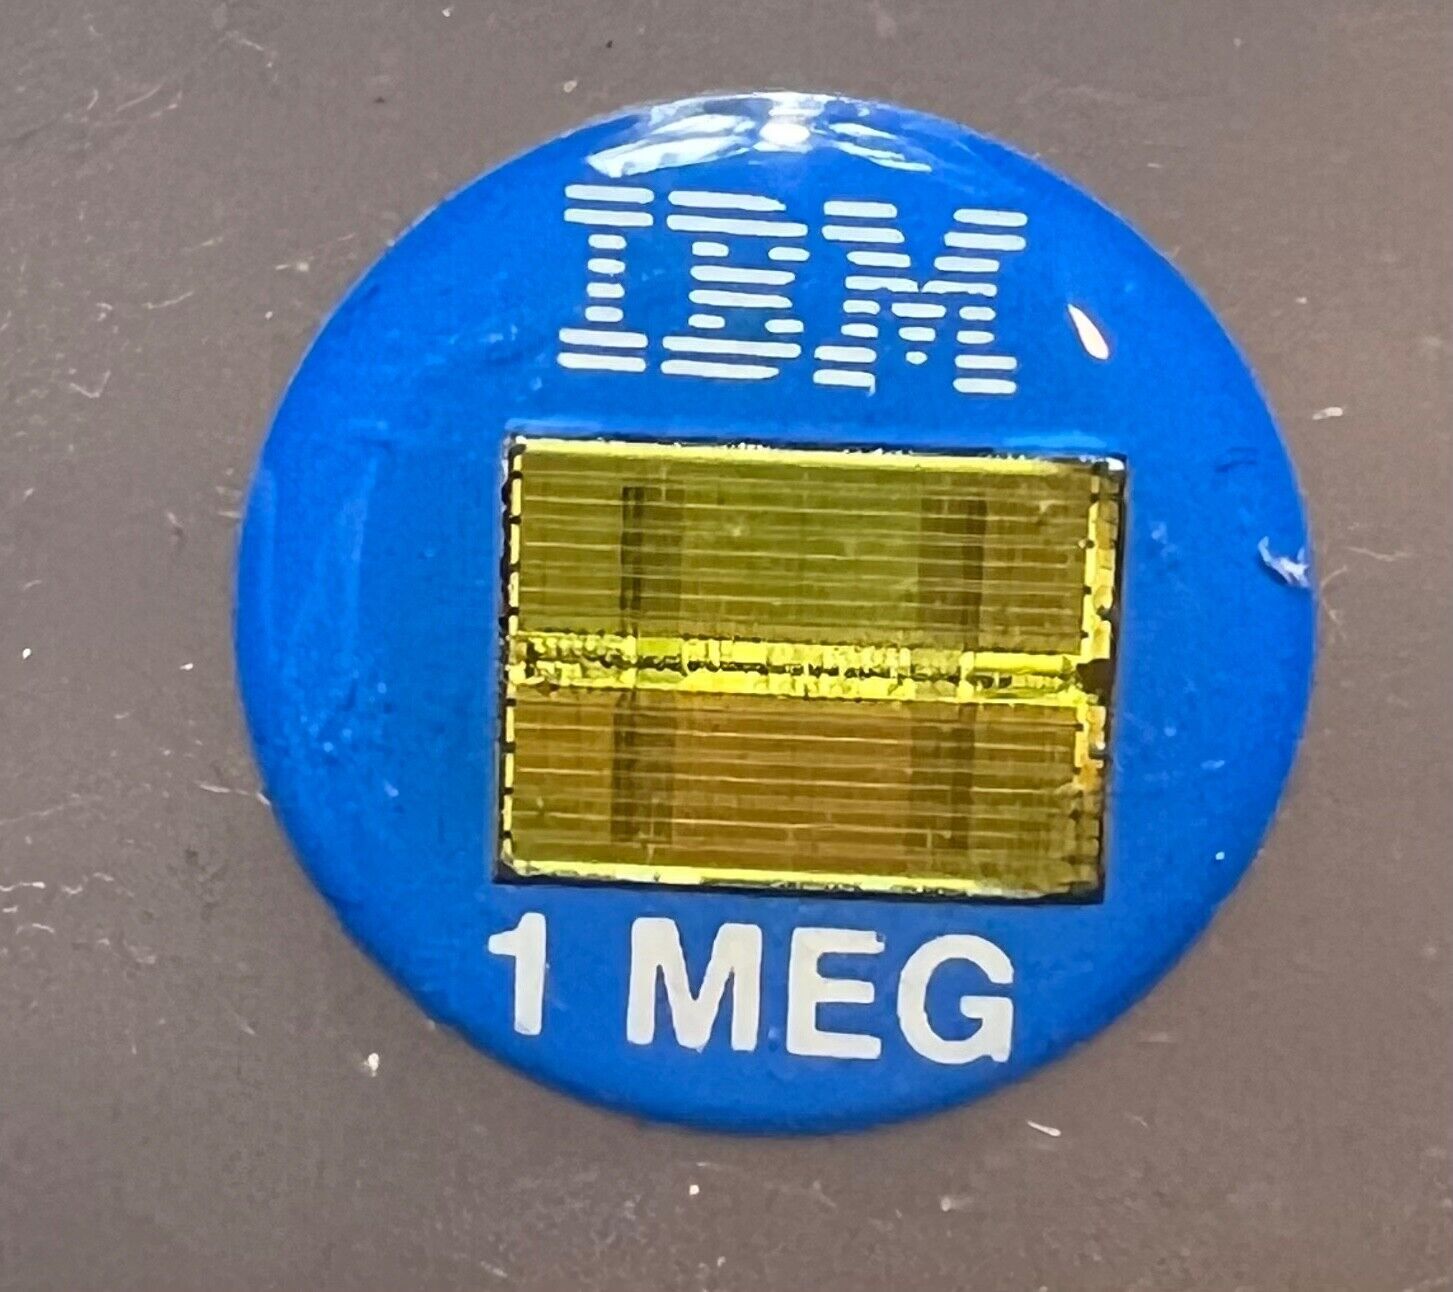 One vintage IBM 1 MEG memory chip stick on button advertising memorabilia